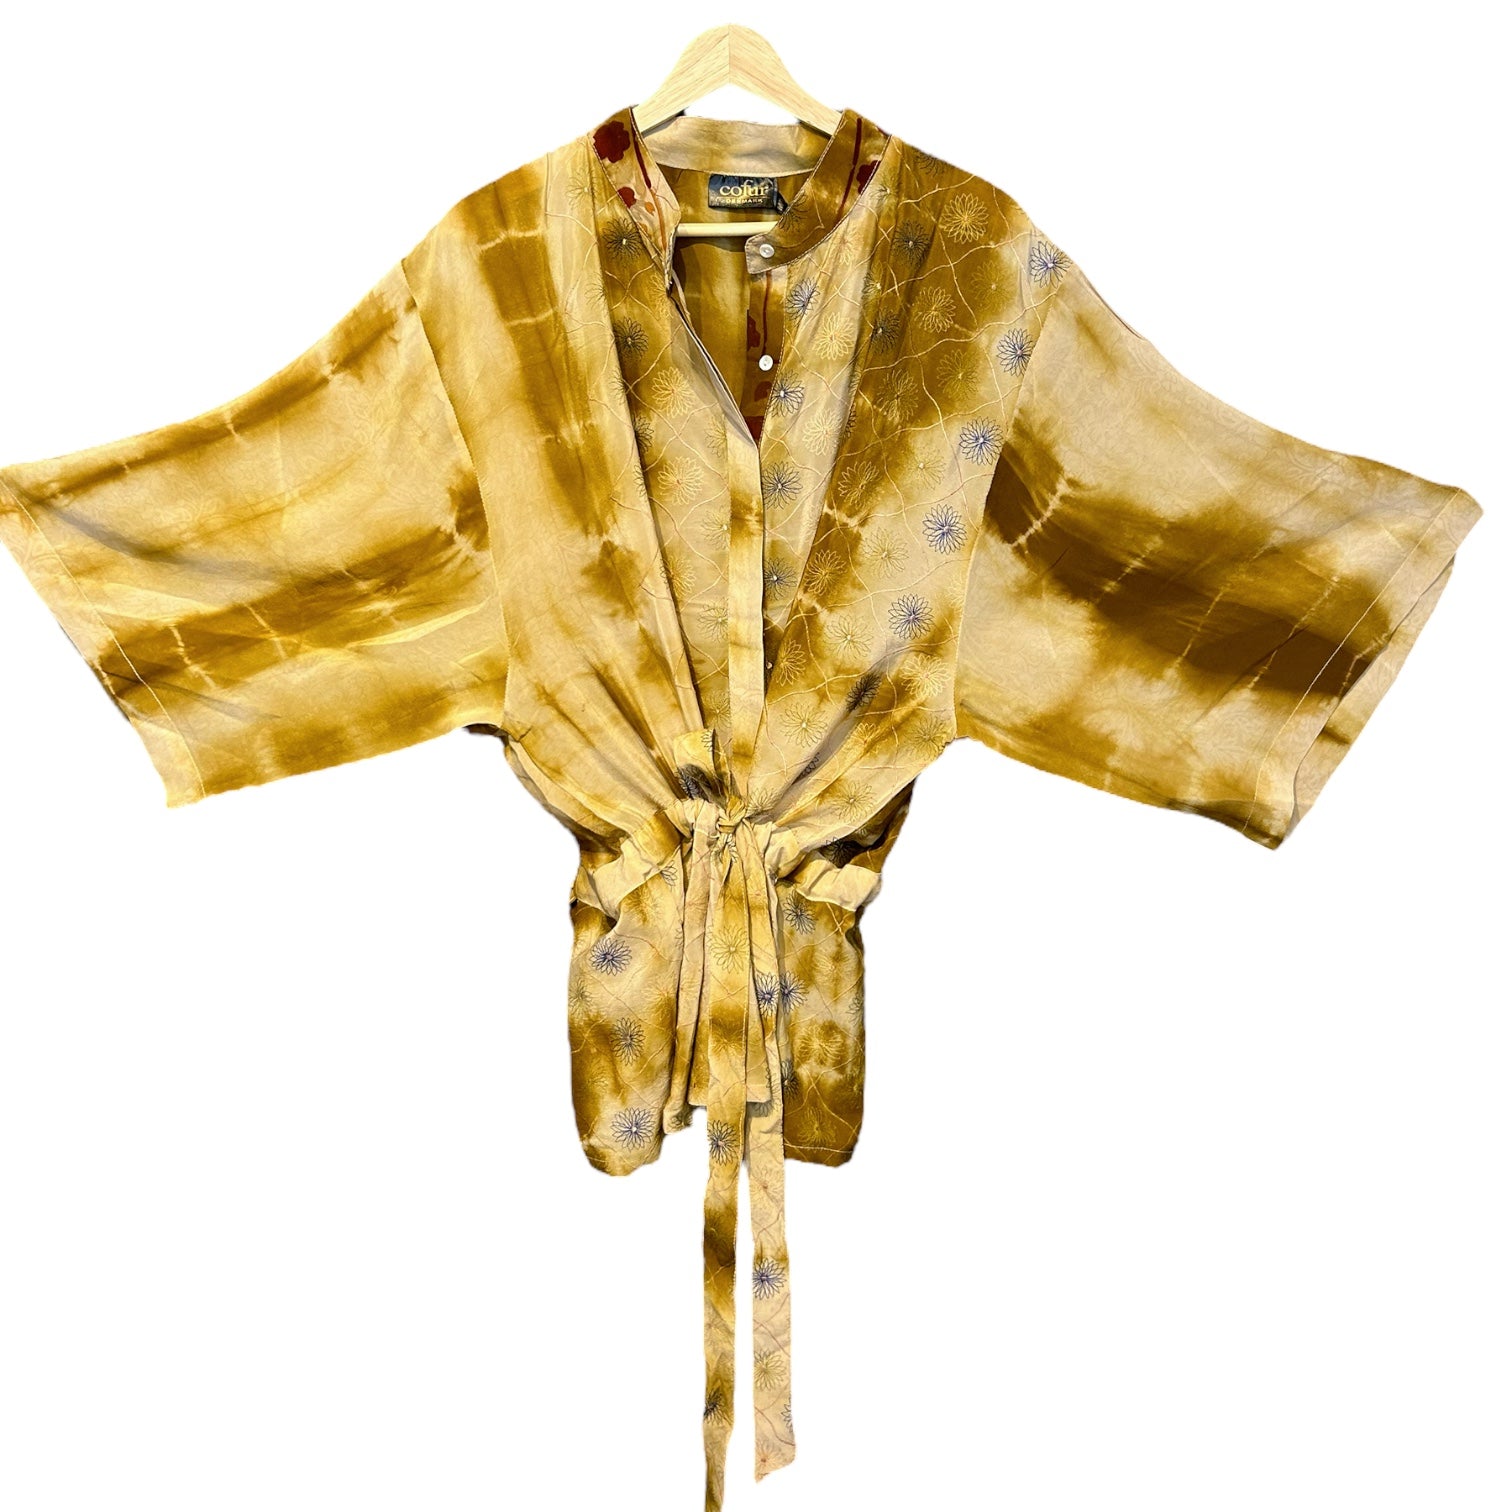 New York Kimono - No. 33 Size: M/L